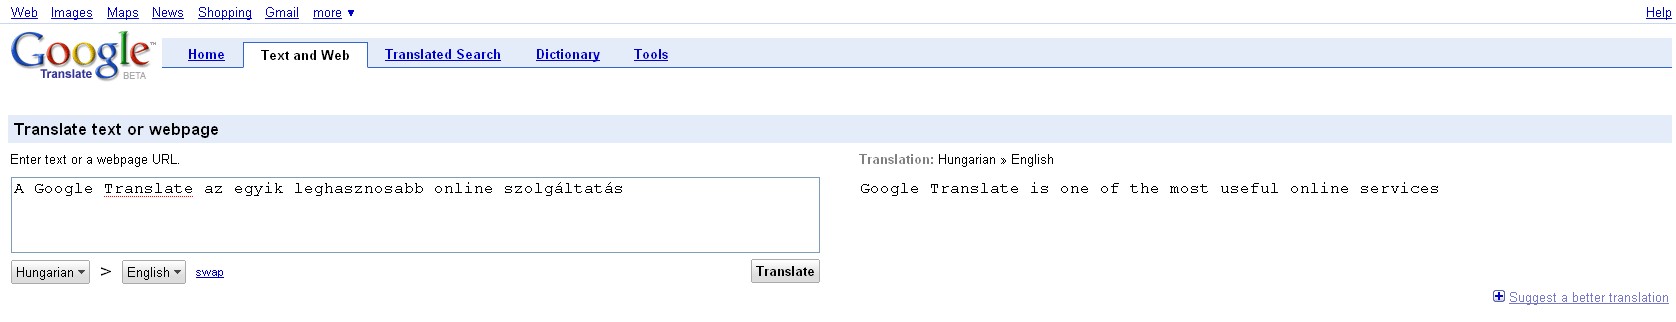 Google Translate példa 1.